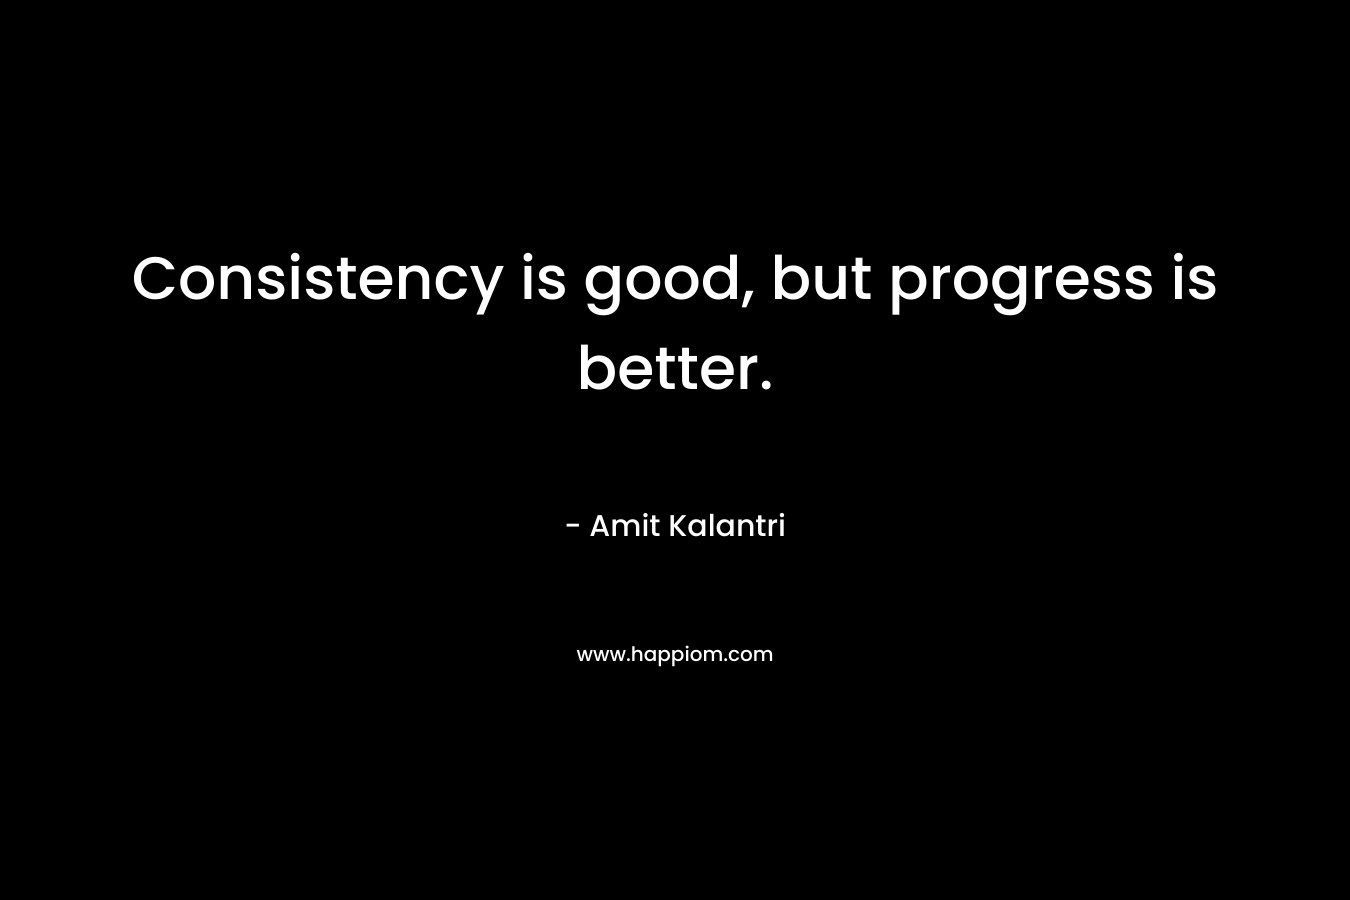 Consistency is good, but progress is better.